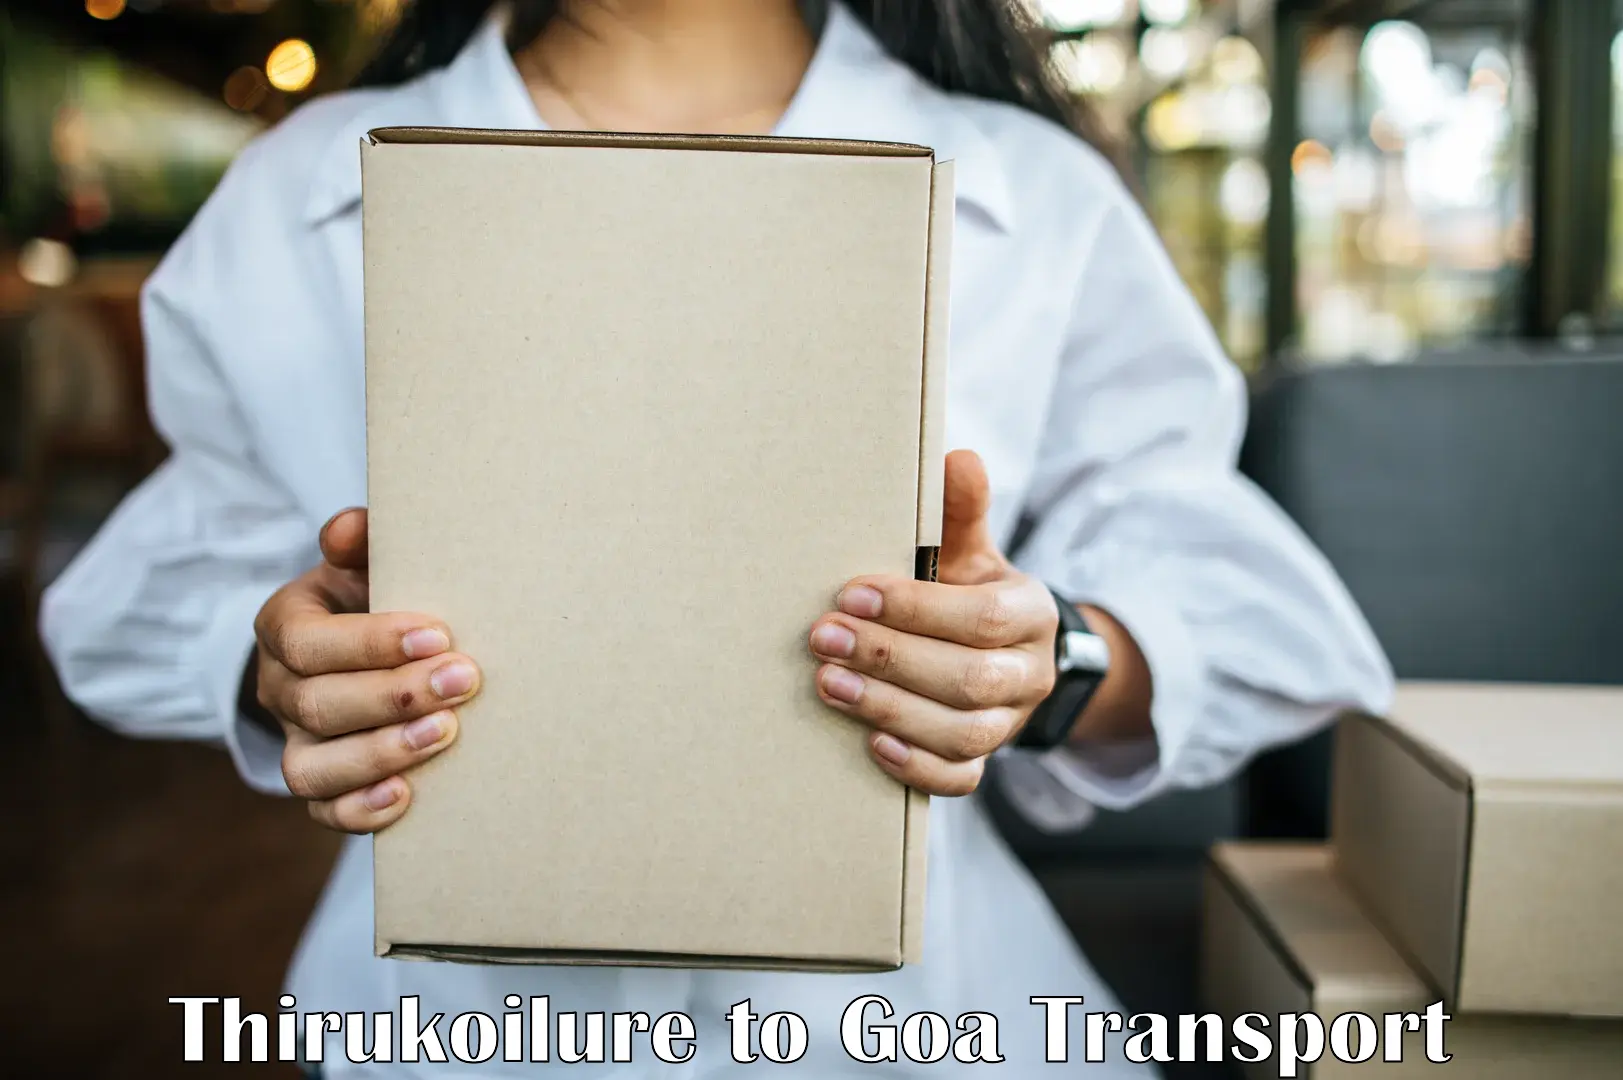 Daily transport service Thirukoilure to NIT Goa